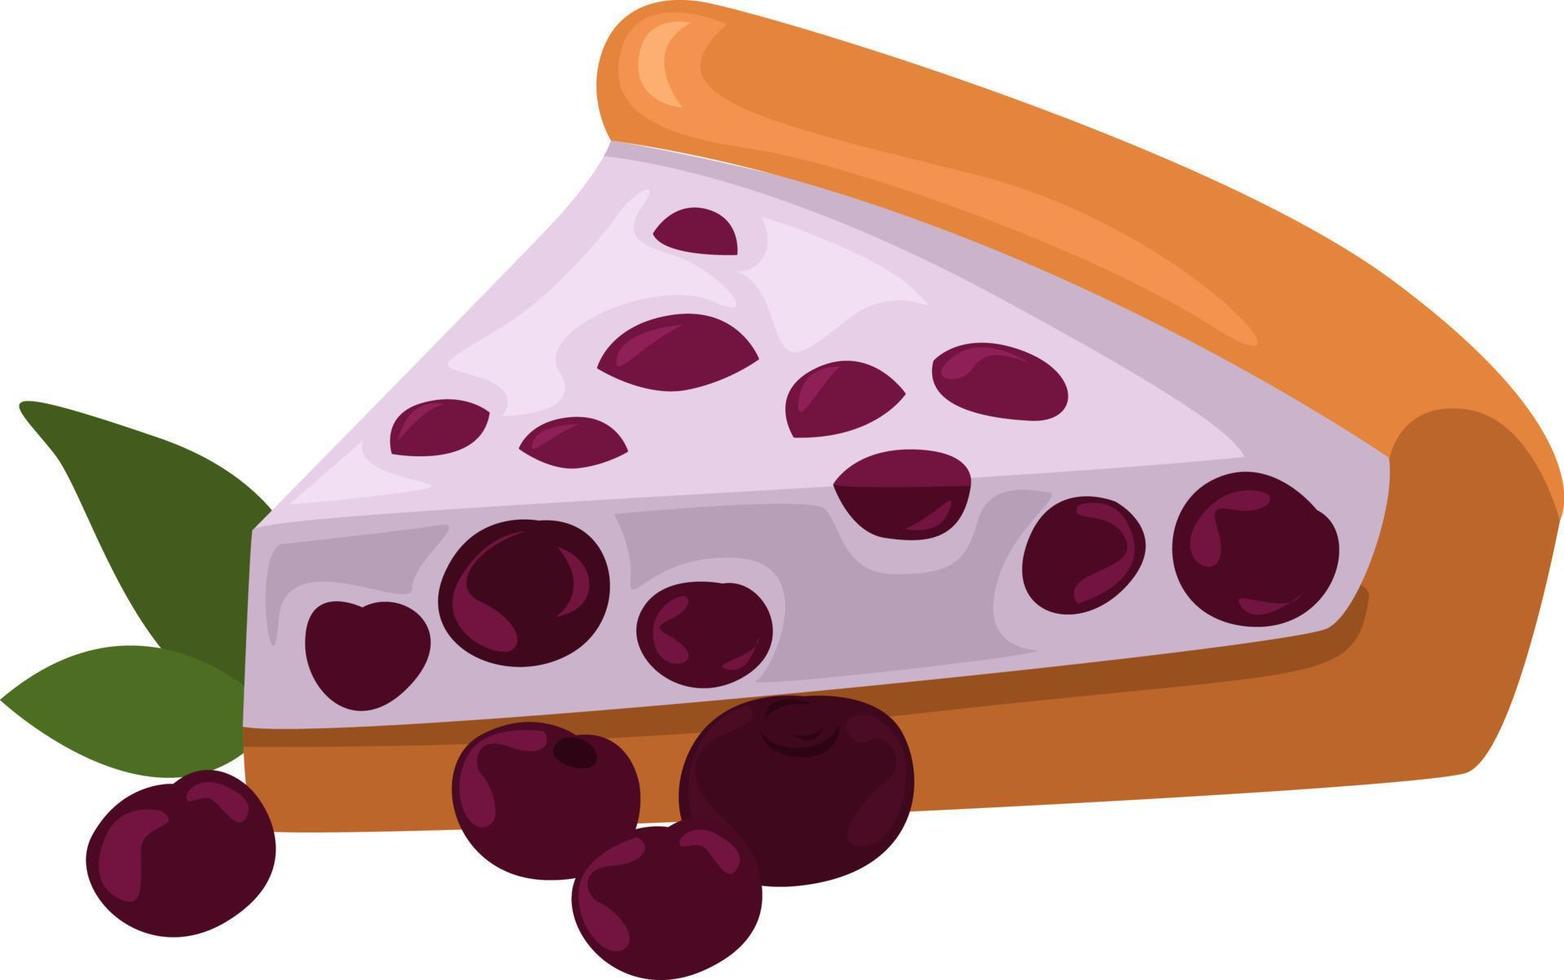 Blueberry pie, illustration, vector on white background.